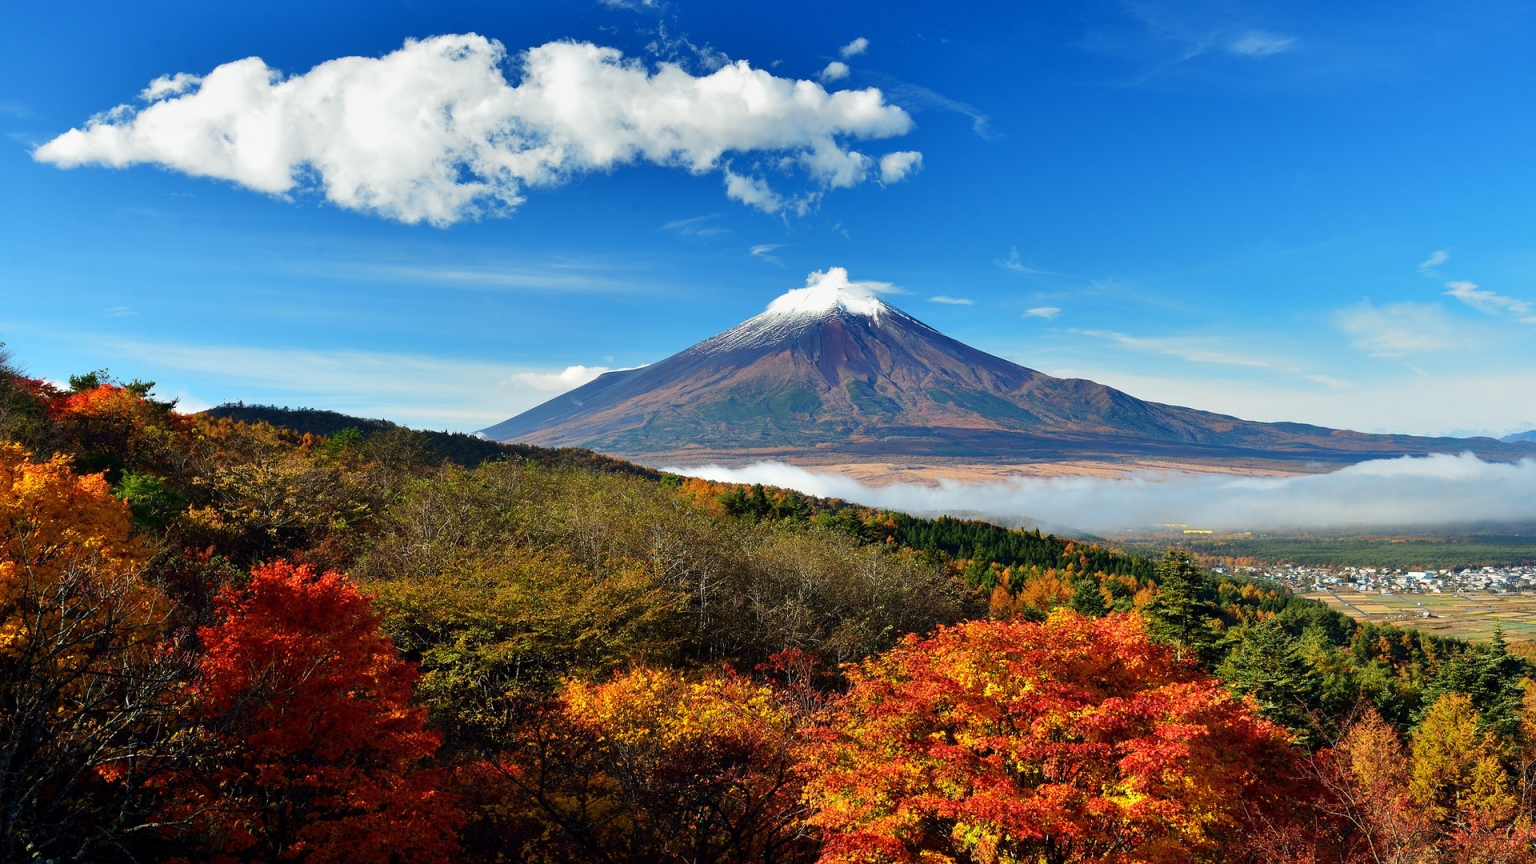 Mount Fuji Japan for 1536 x 864 HDTV resolution